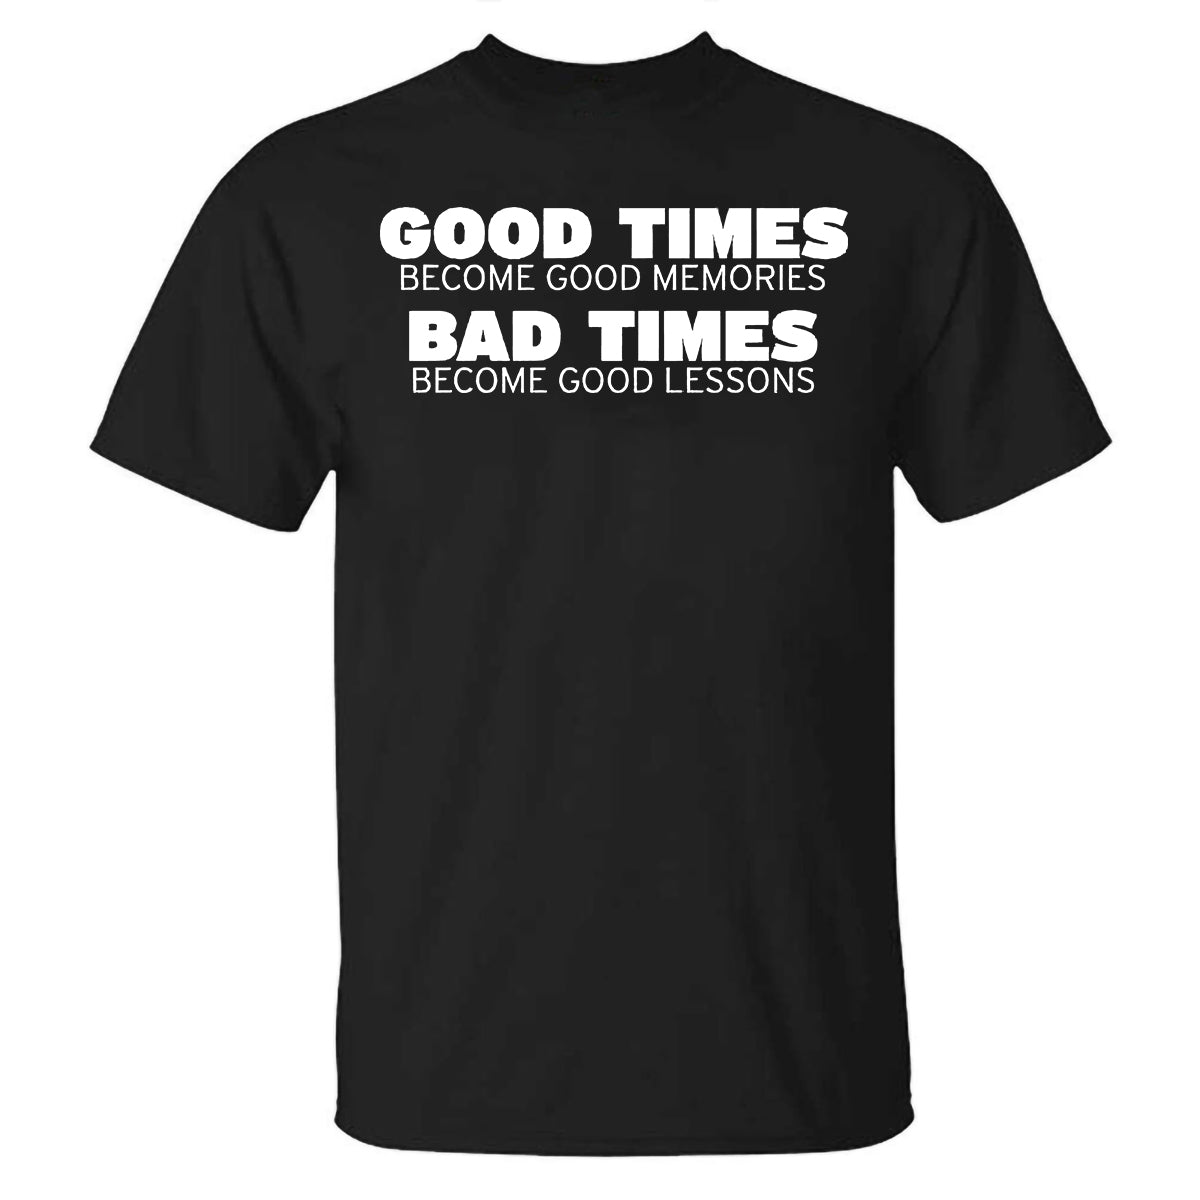 Good Time Become Good Memories Printed T-shirt